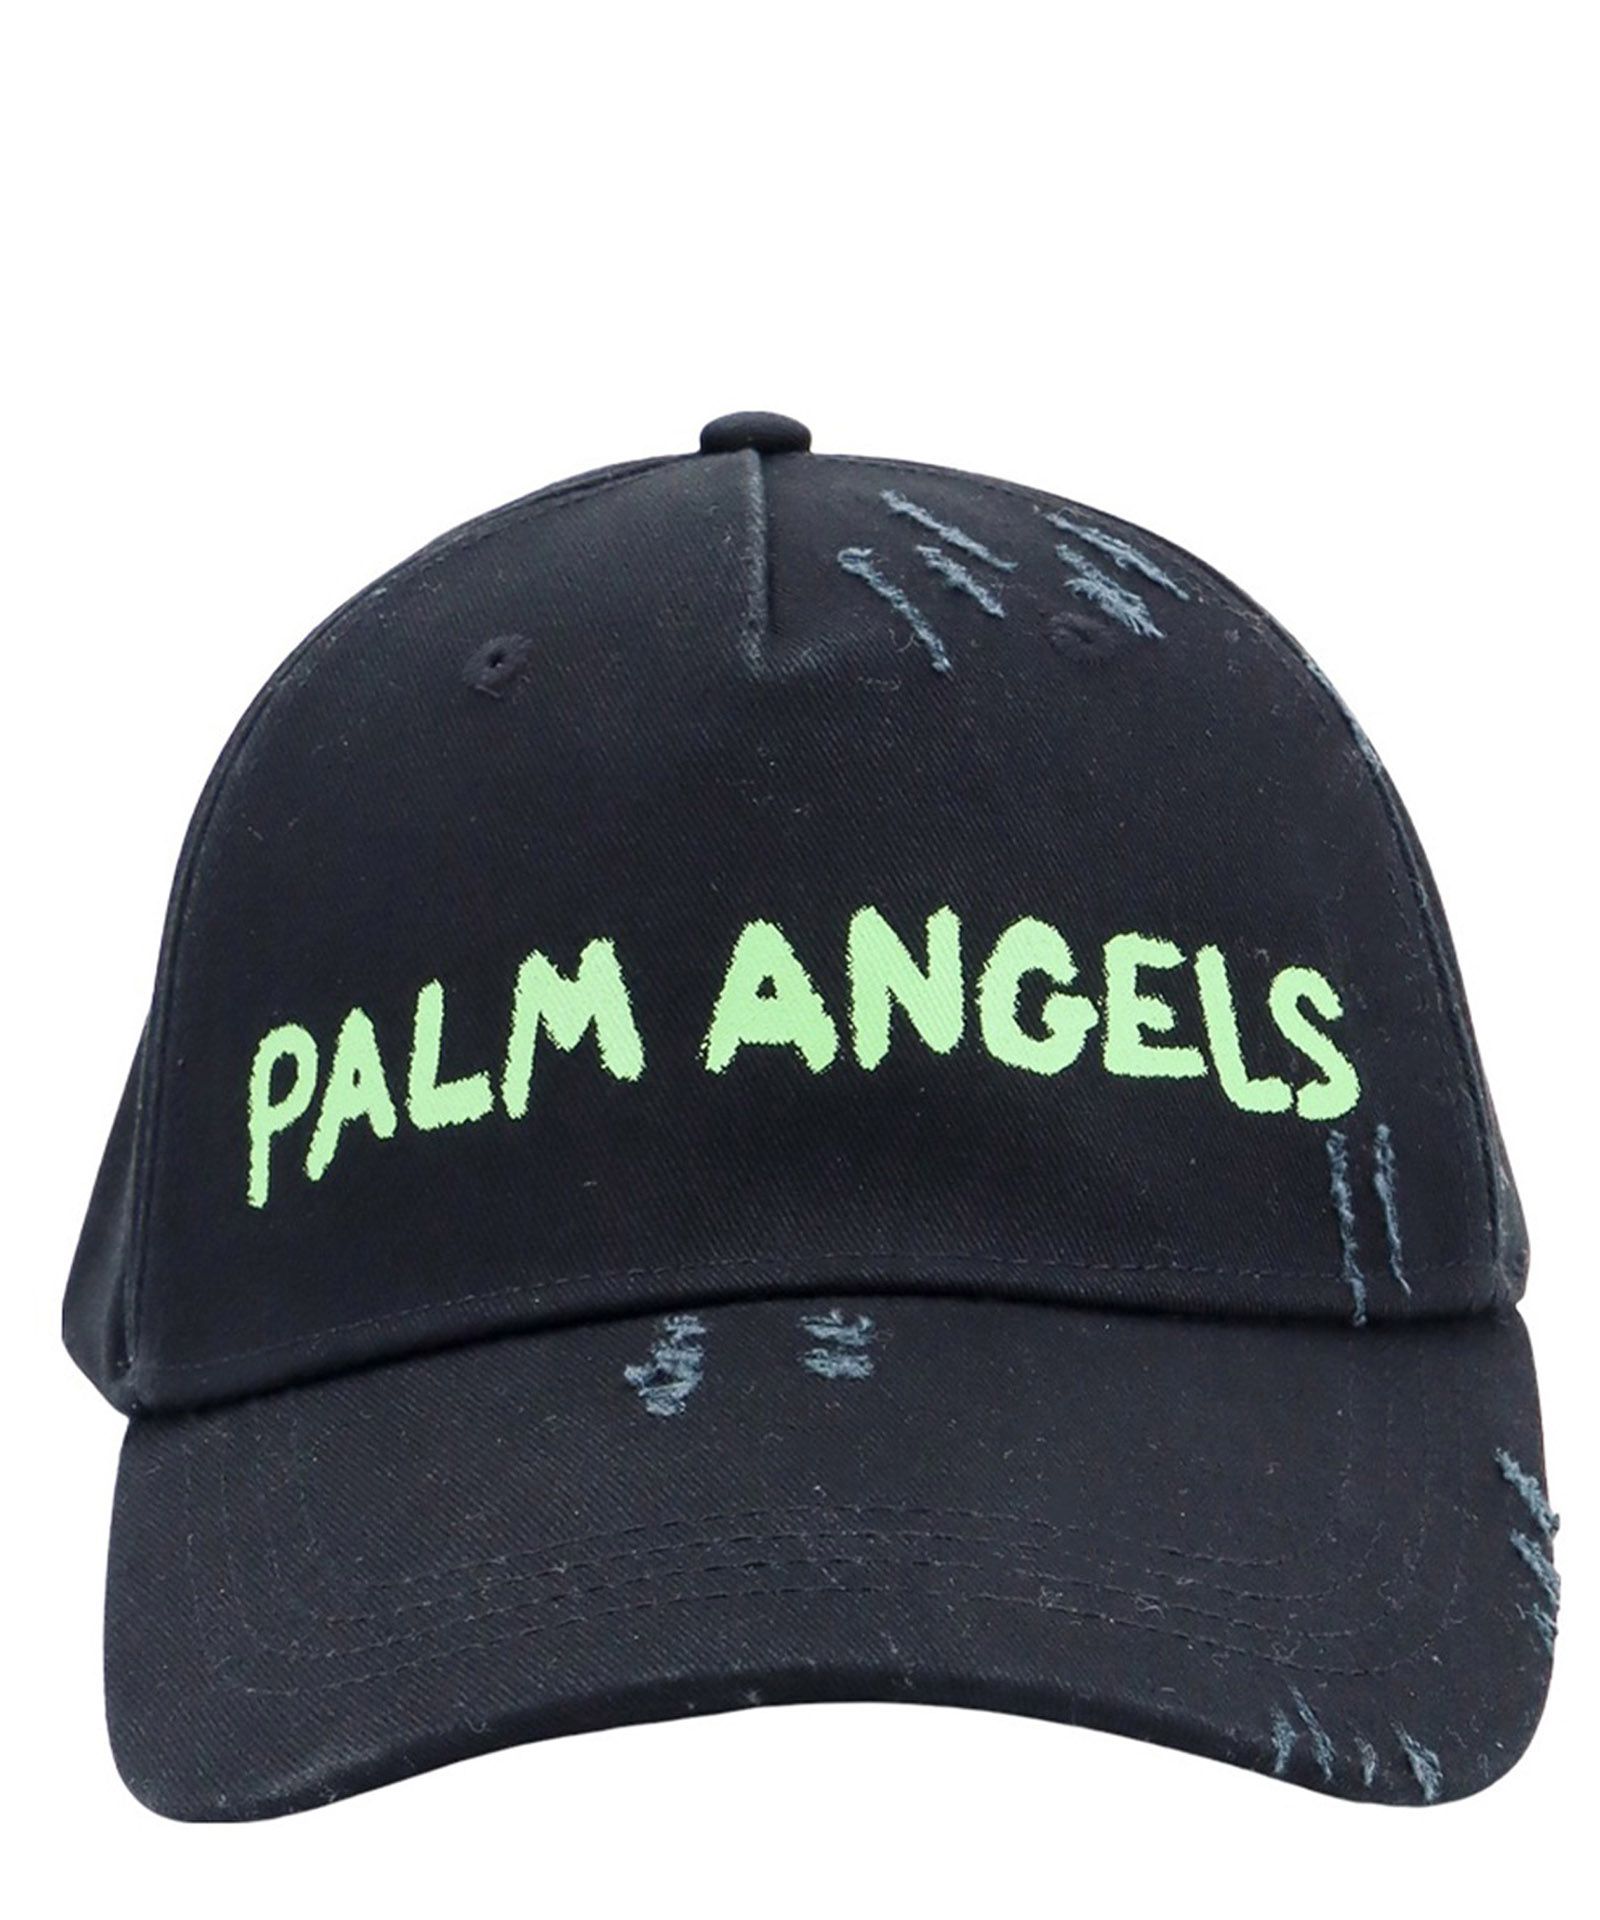 Cappello - Palm Angels - Modalova